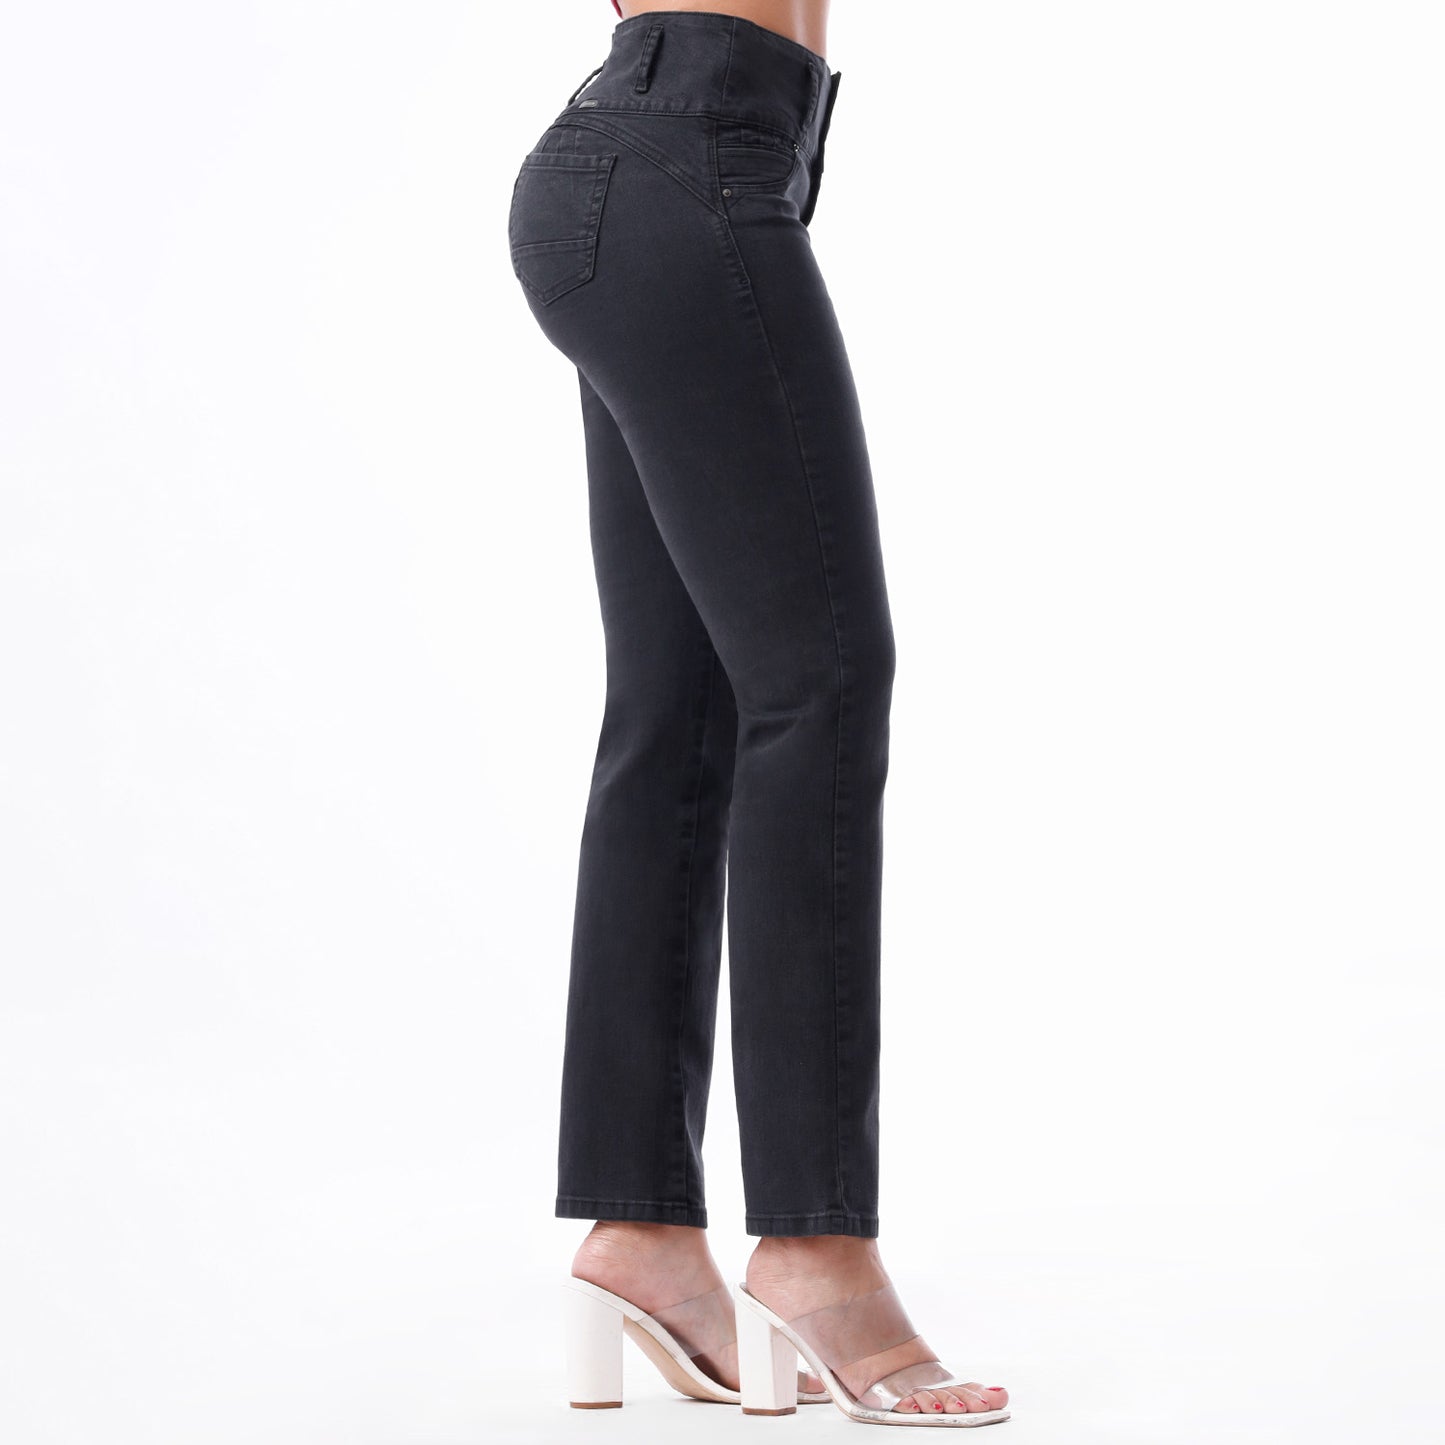 Jeans Push Up Mujer Semimoda Semi Recto Cintura Carbón – 220664